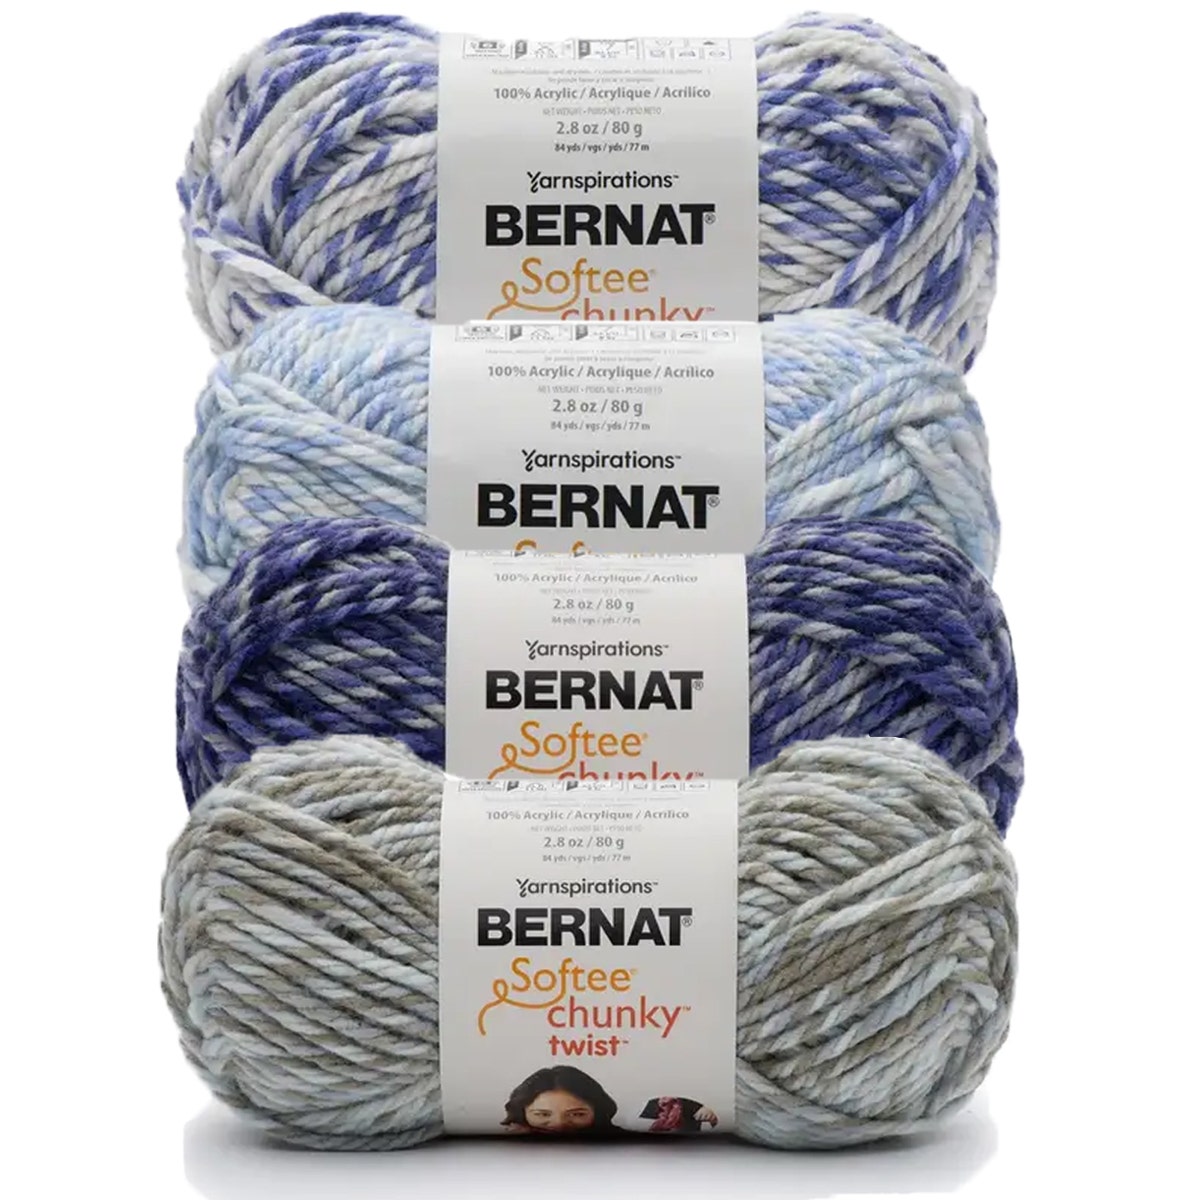 Bernat Extra Thick Blanket Yarn 6pk by Bernat